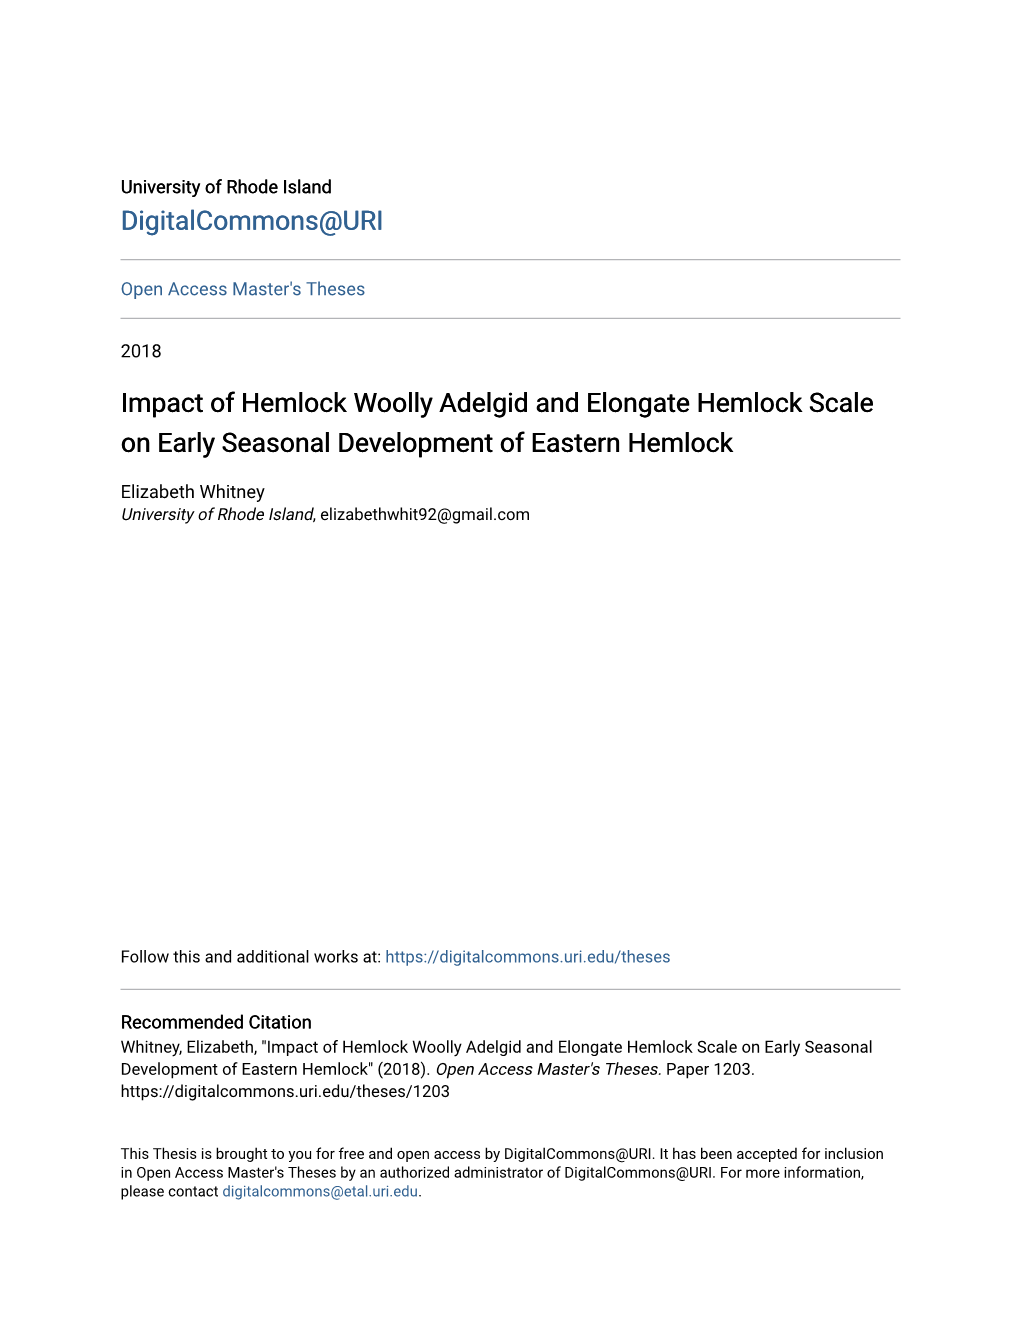 Impact of Hemlock Woolly Adelgid and Elongate Hemlock Scale on Early Seasonal Development of Eastern Hemlock